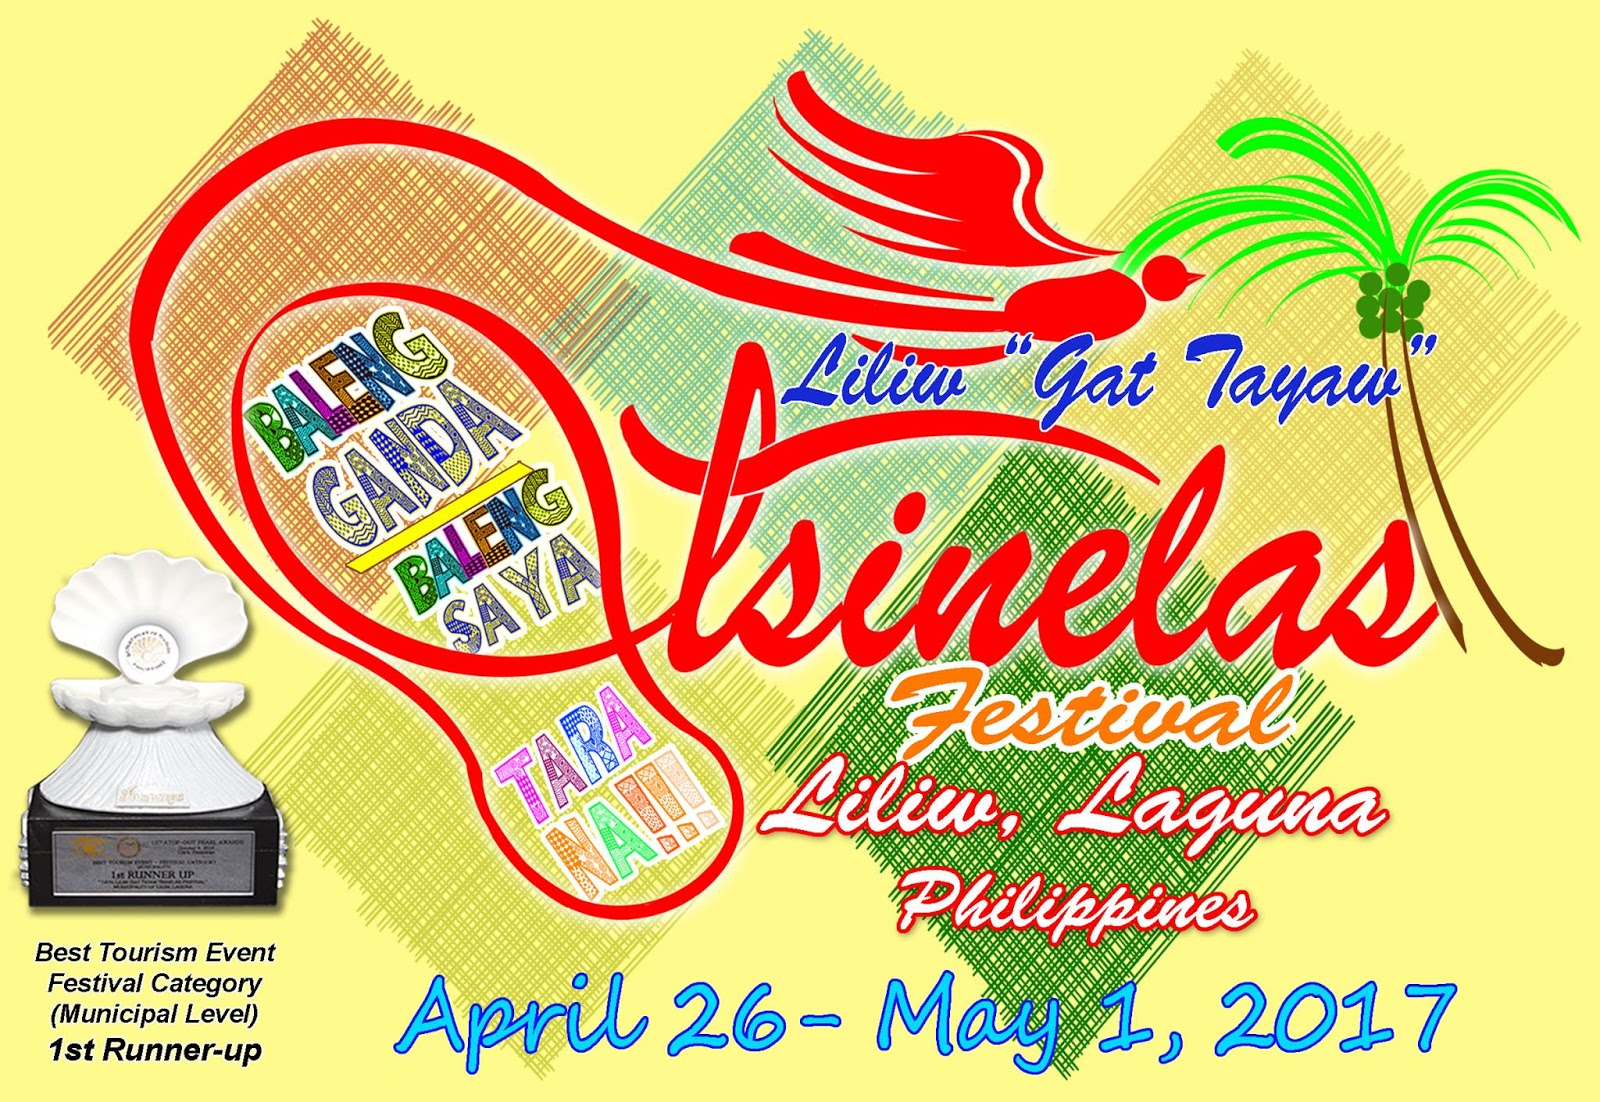 Top 10 Festivals of the Province of LAGUNA Liliw, Laguna Gat Tayaw